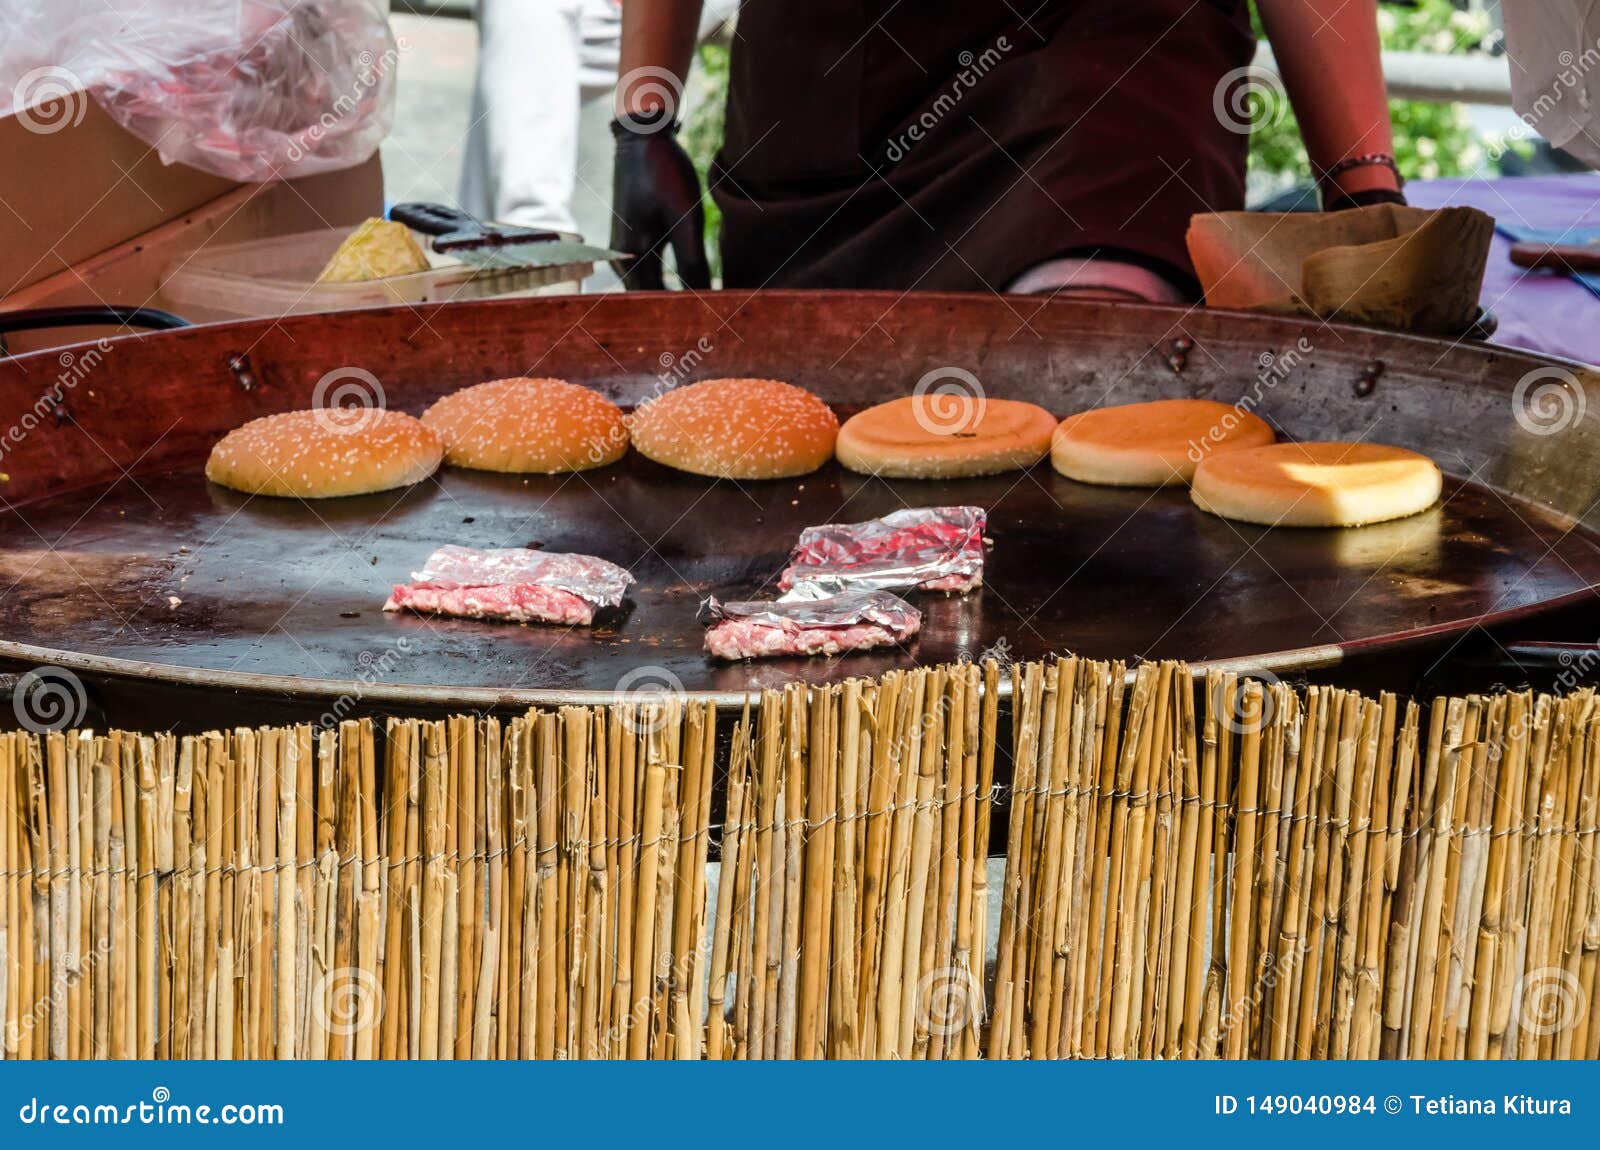 https://thumbs.dreamstime.com/z/cook-burgers-street-large-grill-street-food-cook-burgers-street-large-grill-149040984.jpg